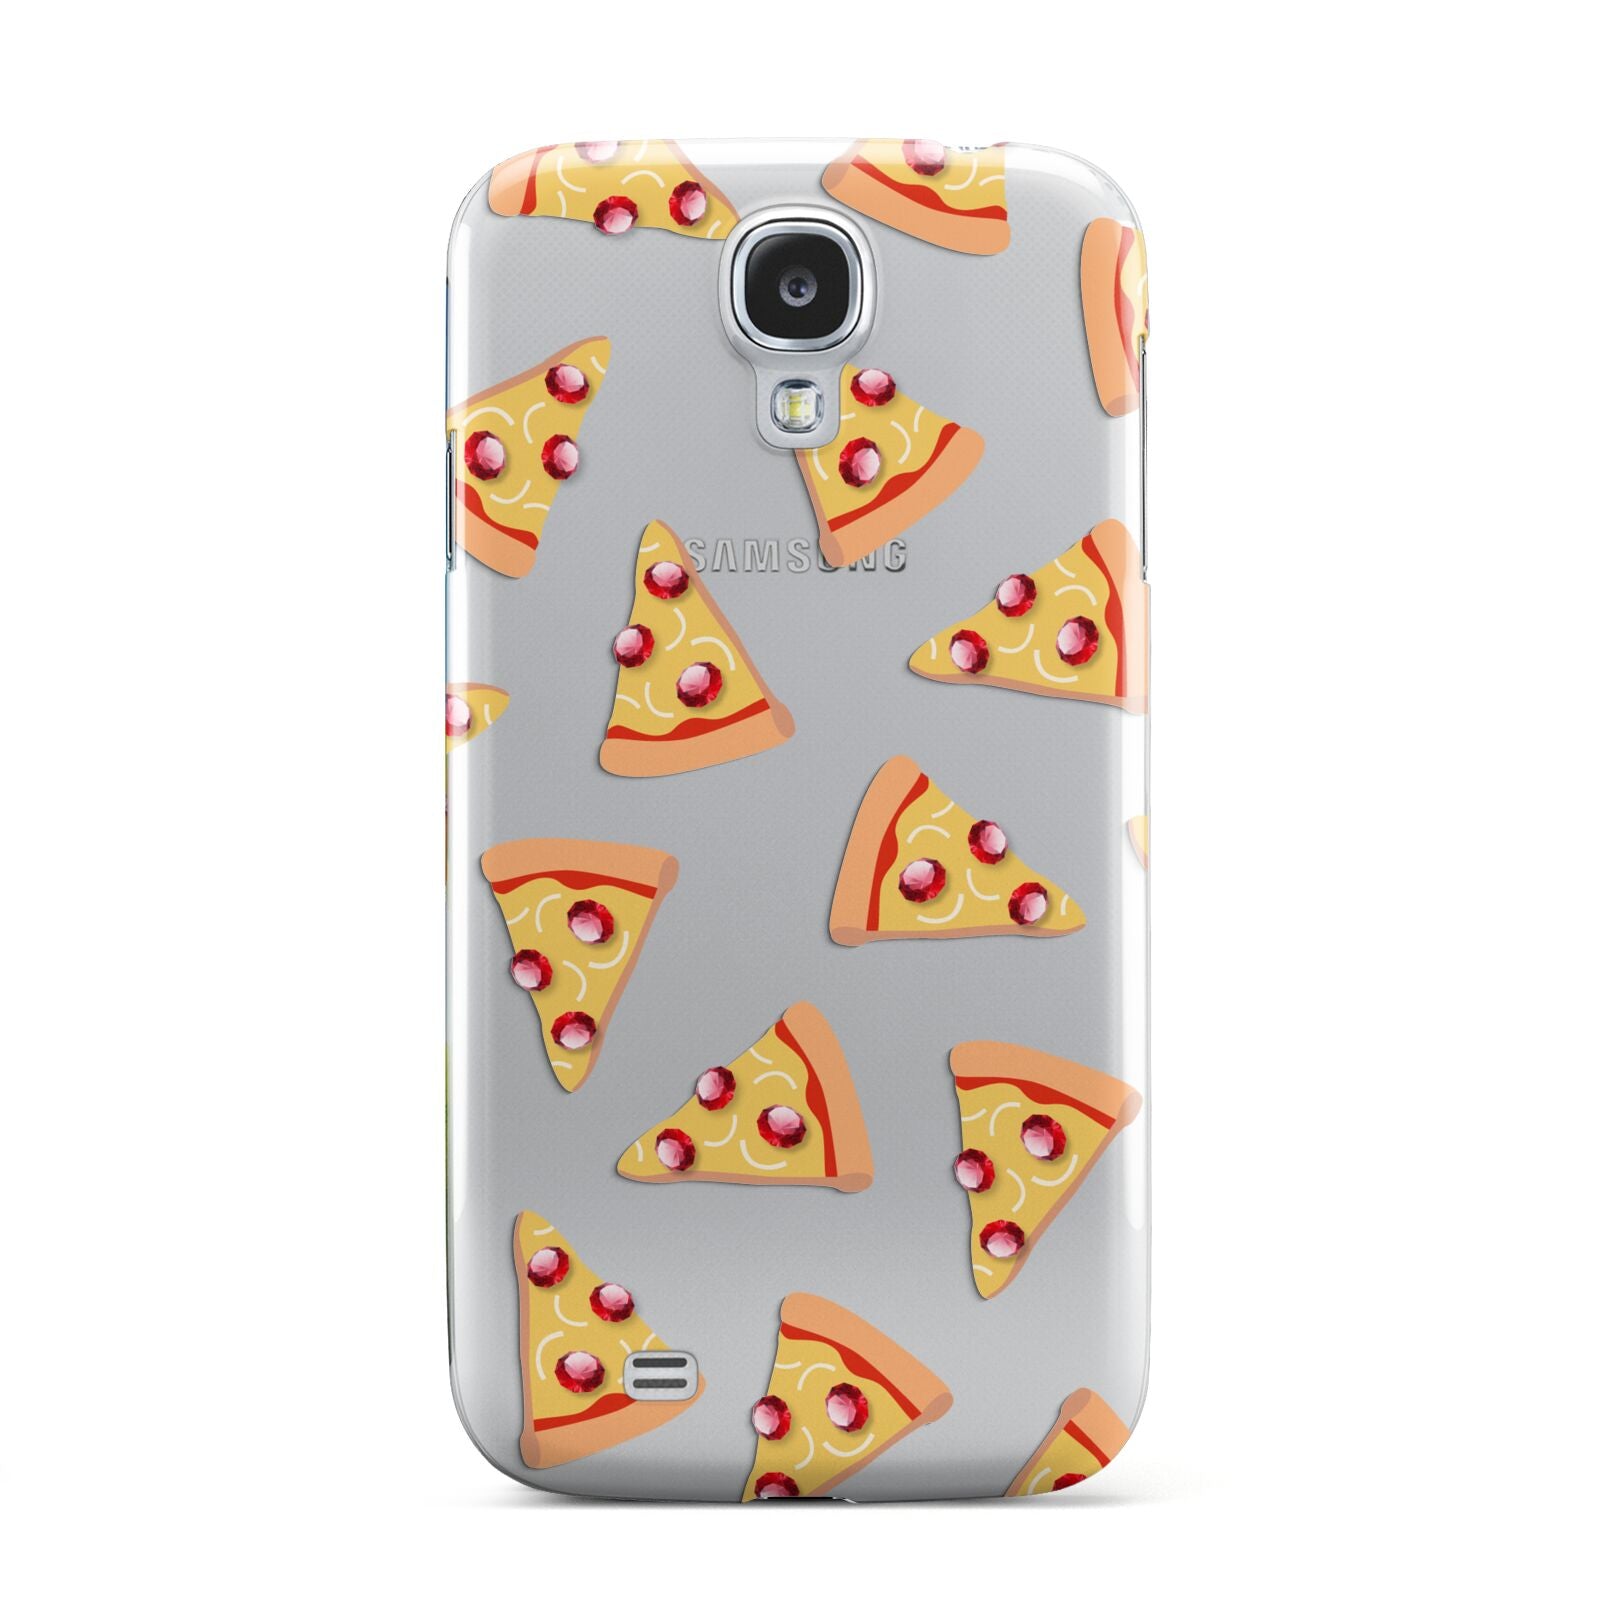 Rubies on Cartoon Pizza Slices Samsung Galaxy S4 Case